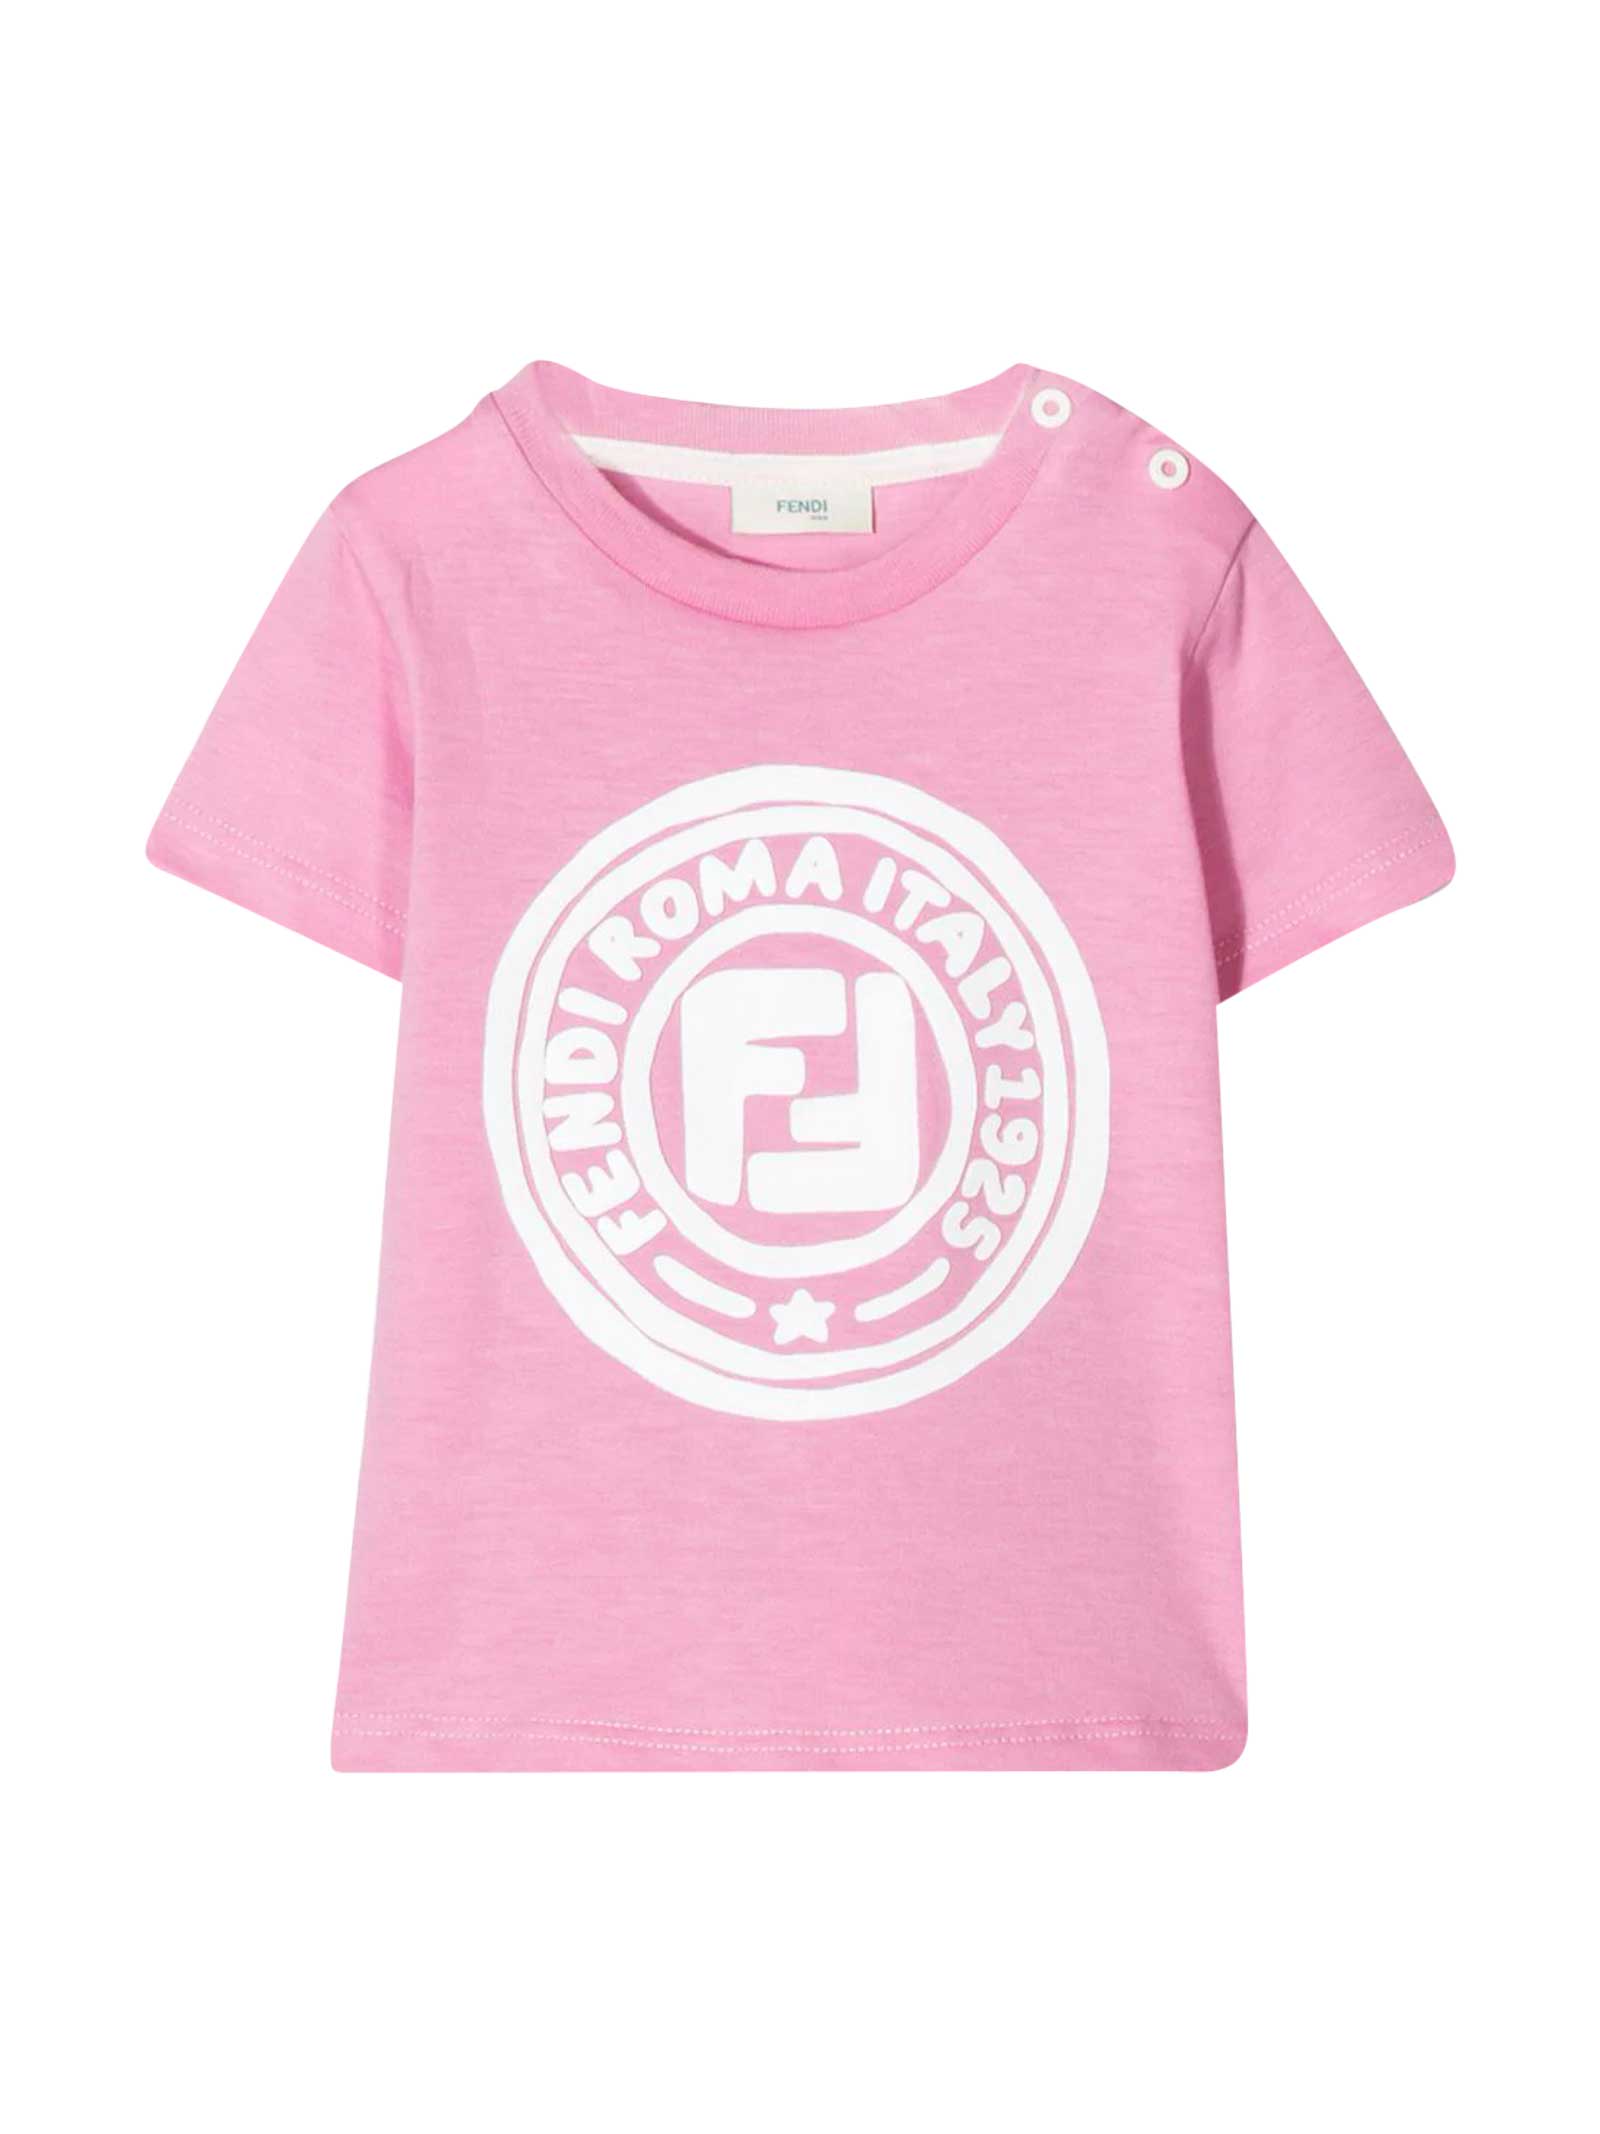 Fendi Pink T-shirt